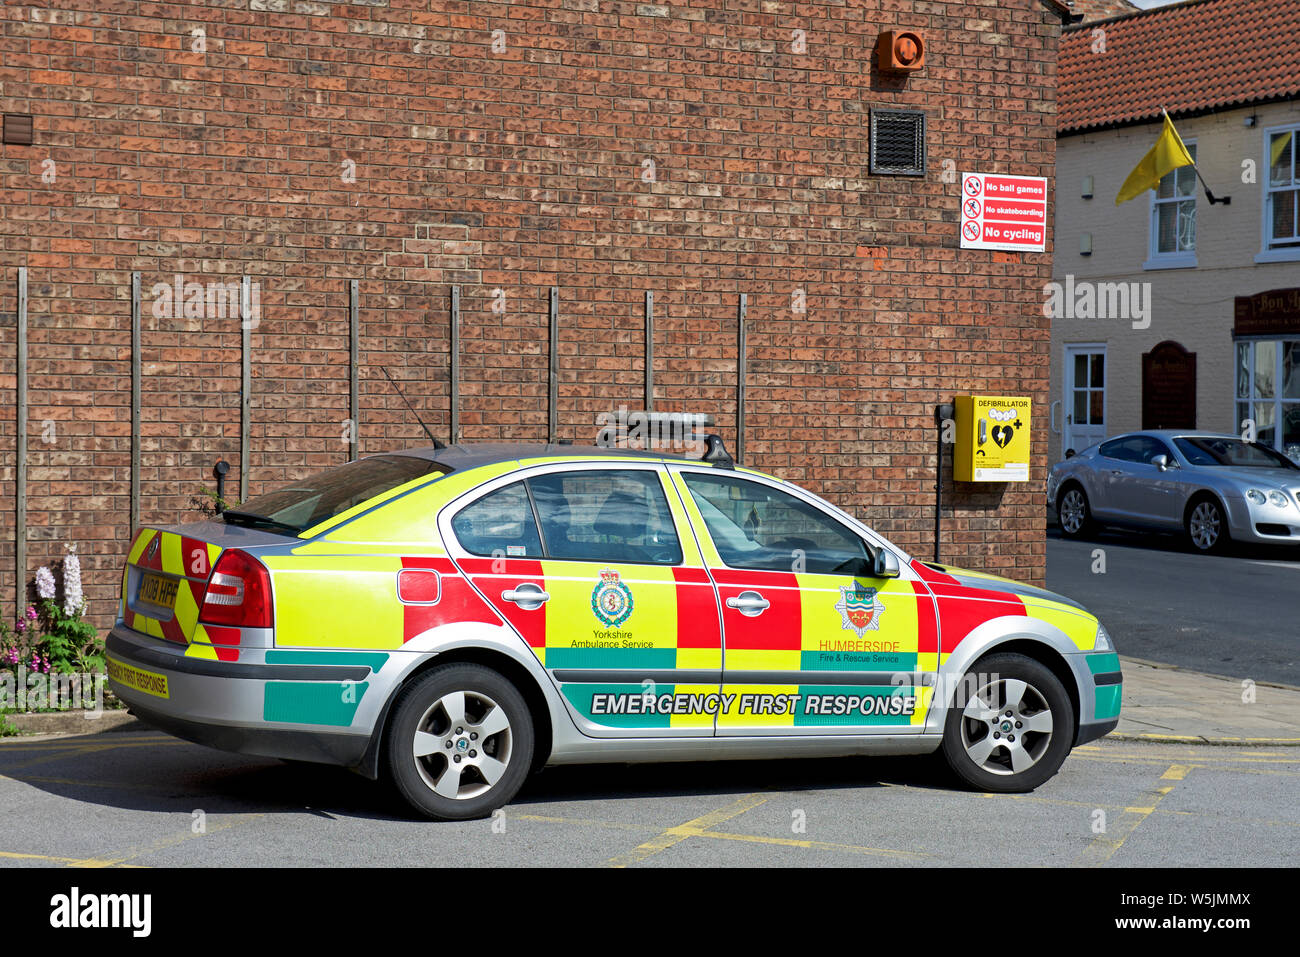 Emergency First Response vehicle parked next to defibrillator, England UK Stock Photo